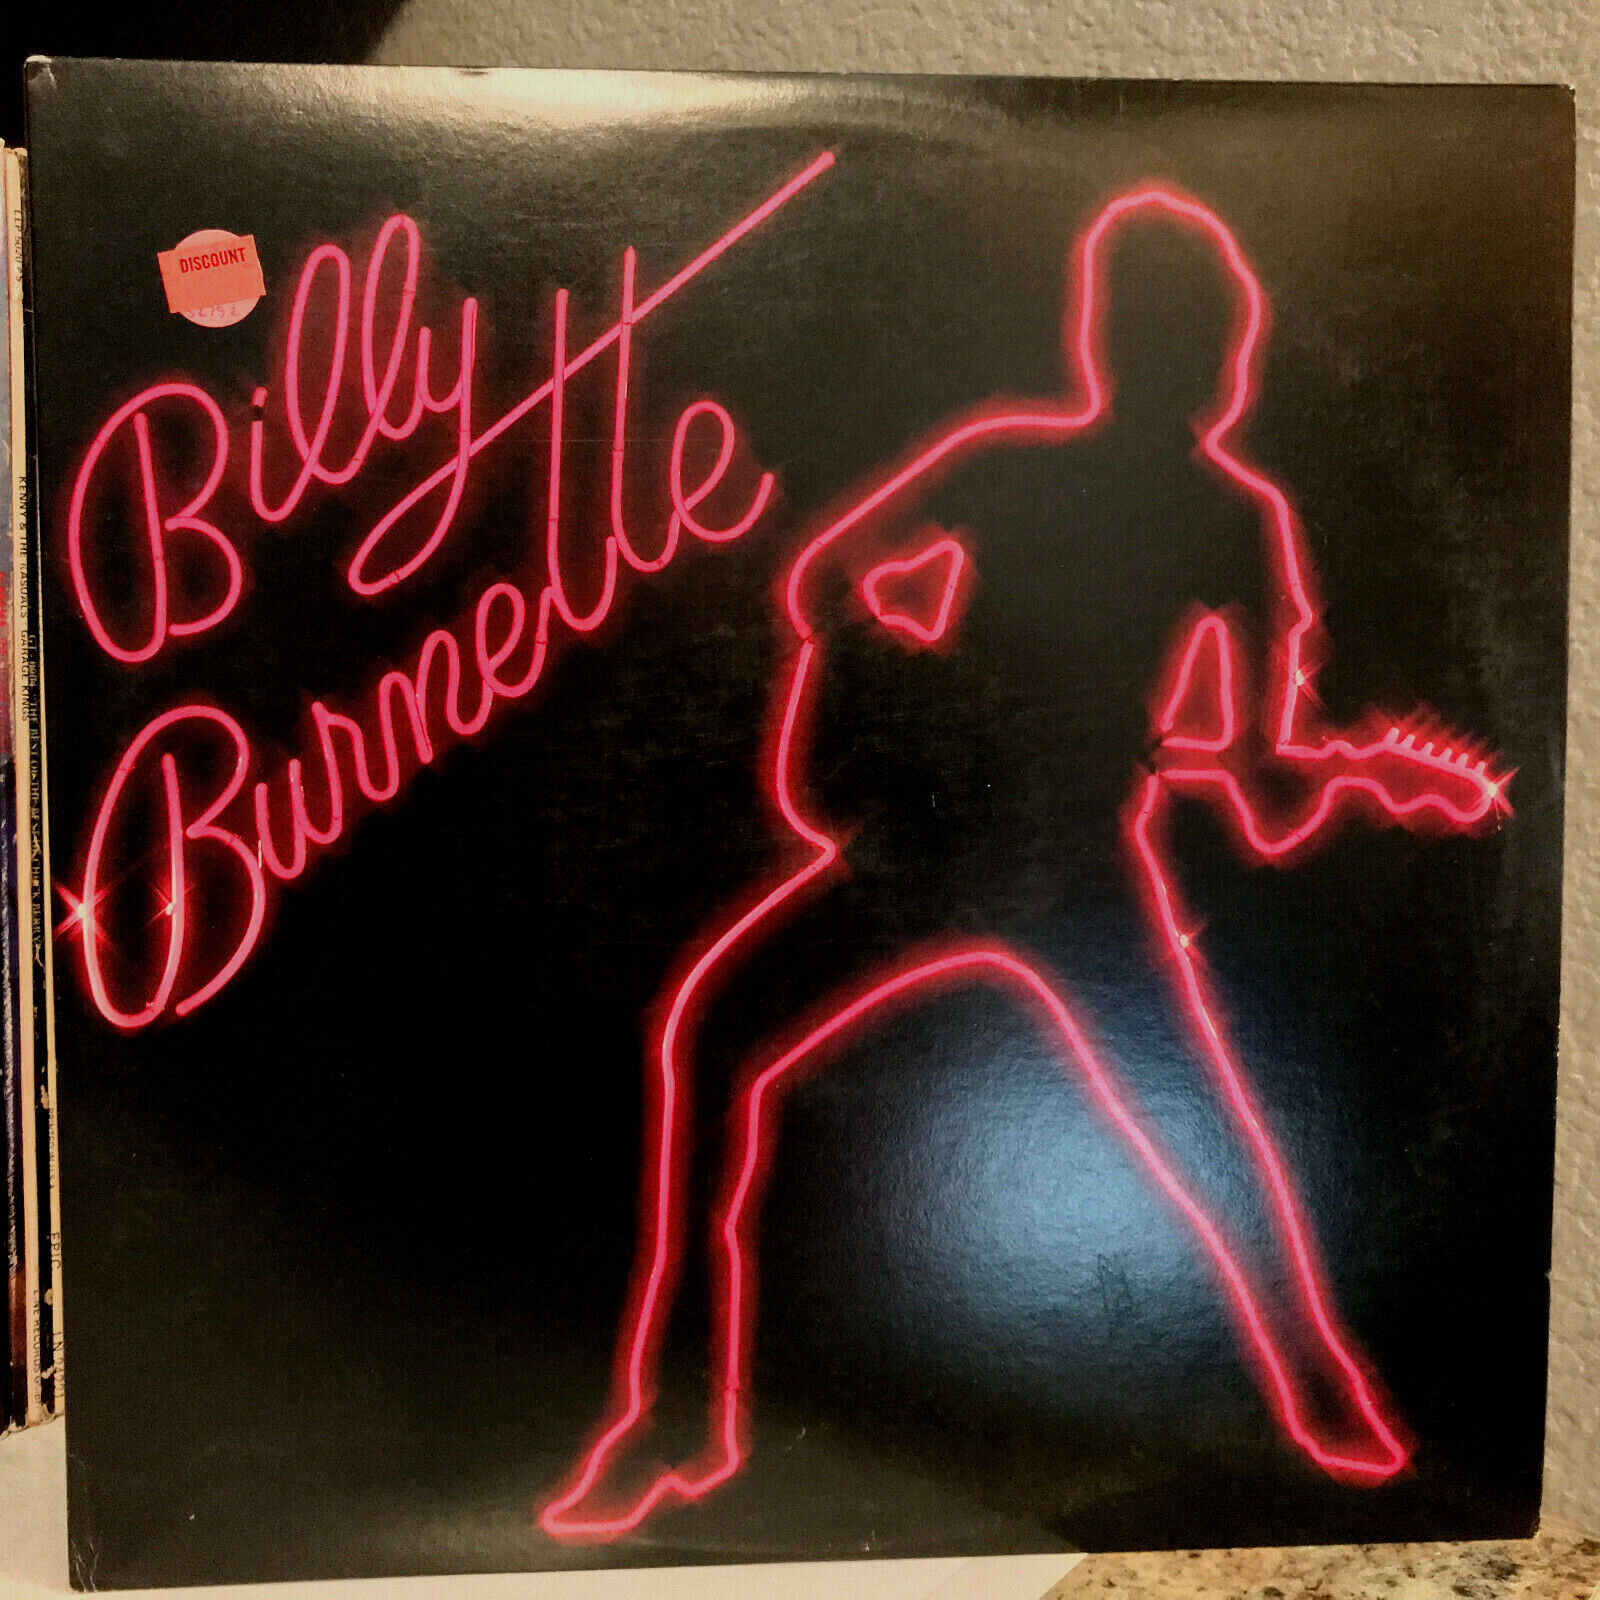 BILLY BURNETTE - Self Titled (Promo) - 12